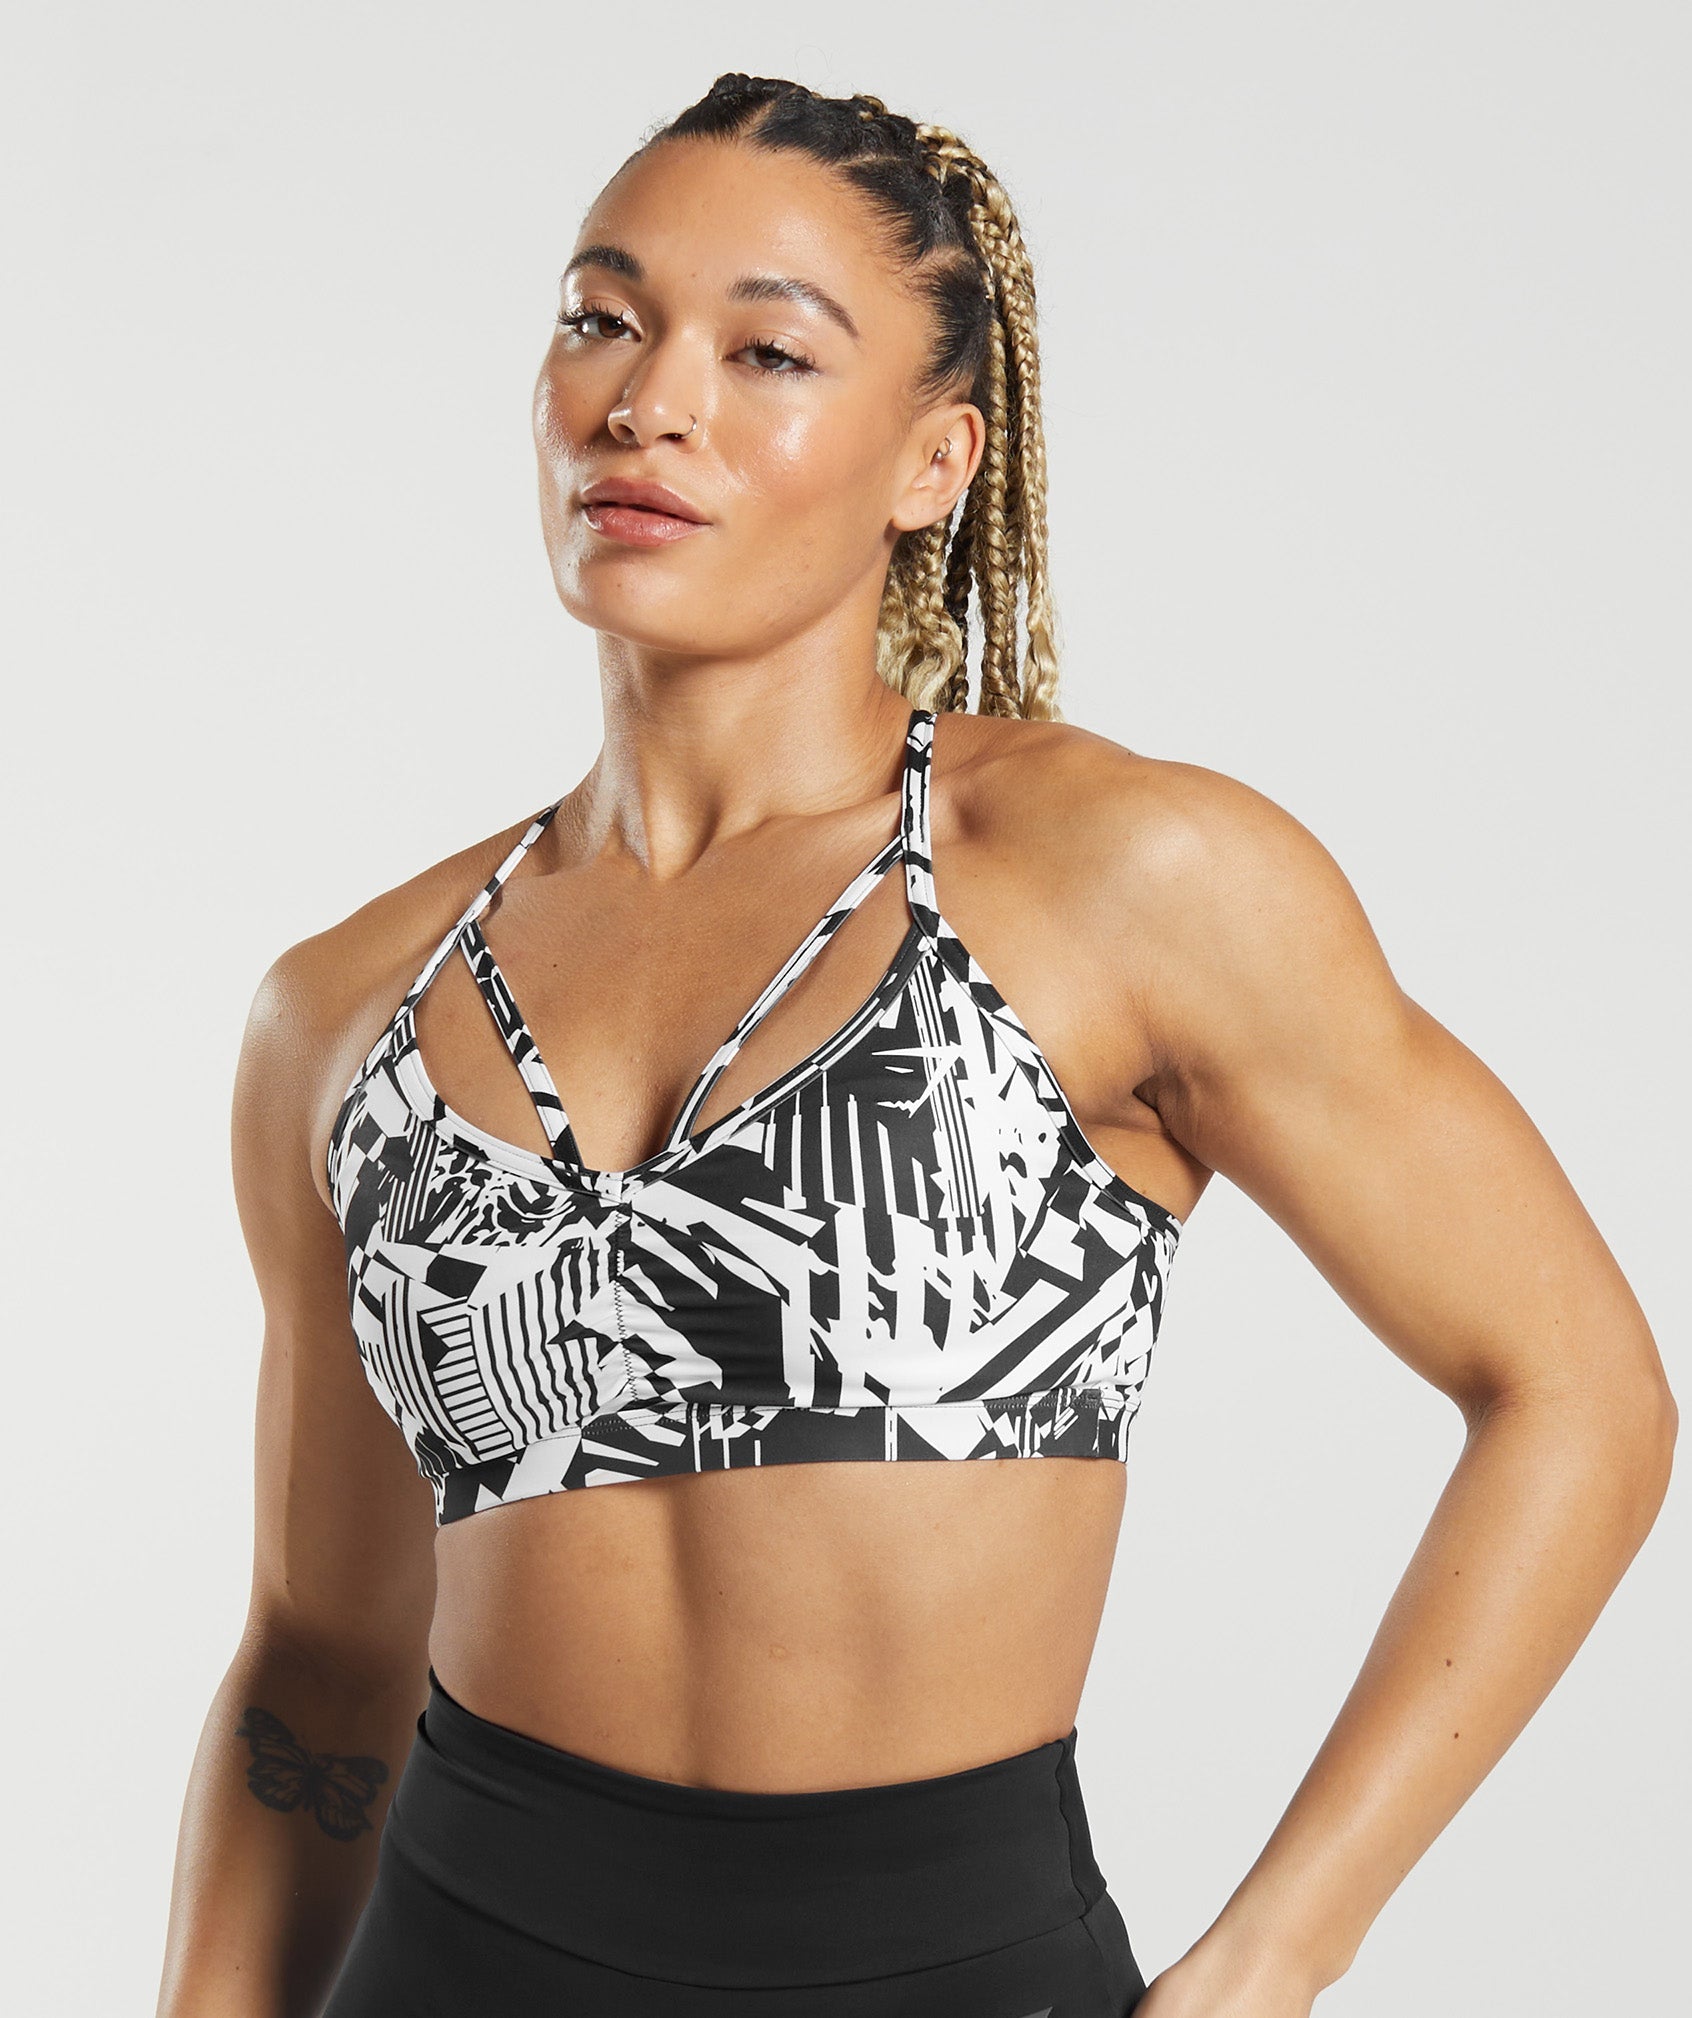 Athleta Zebra Sports Bras for Women